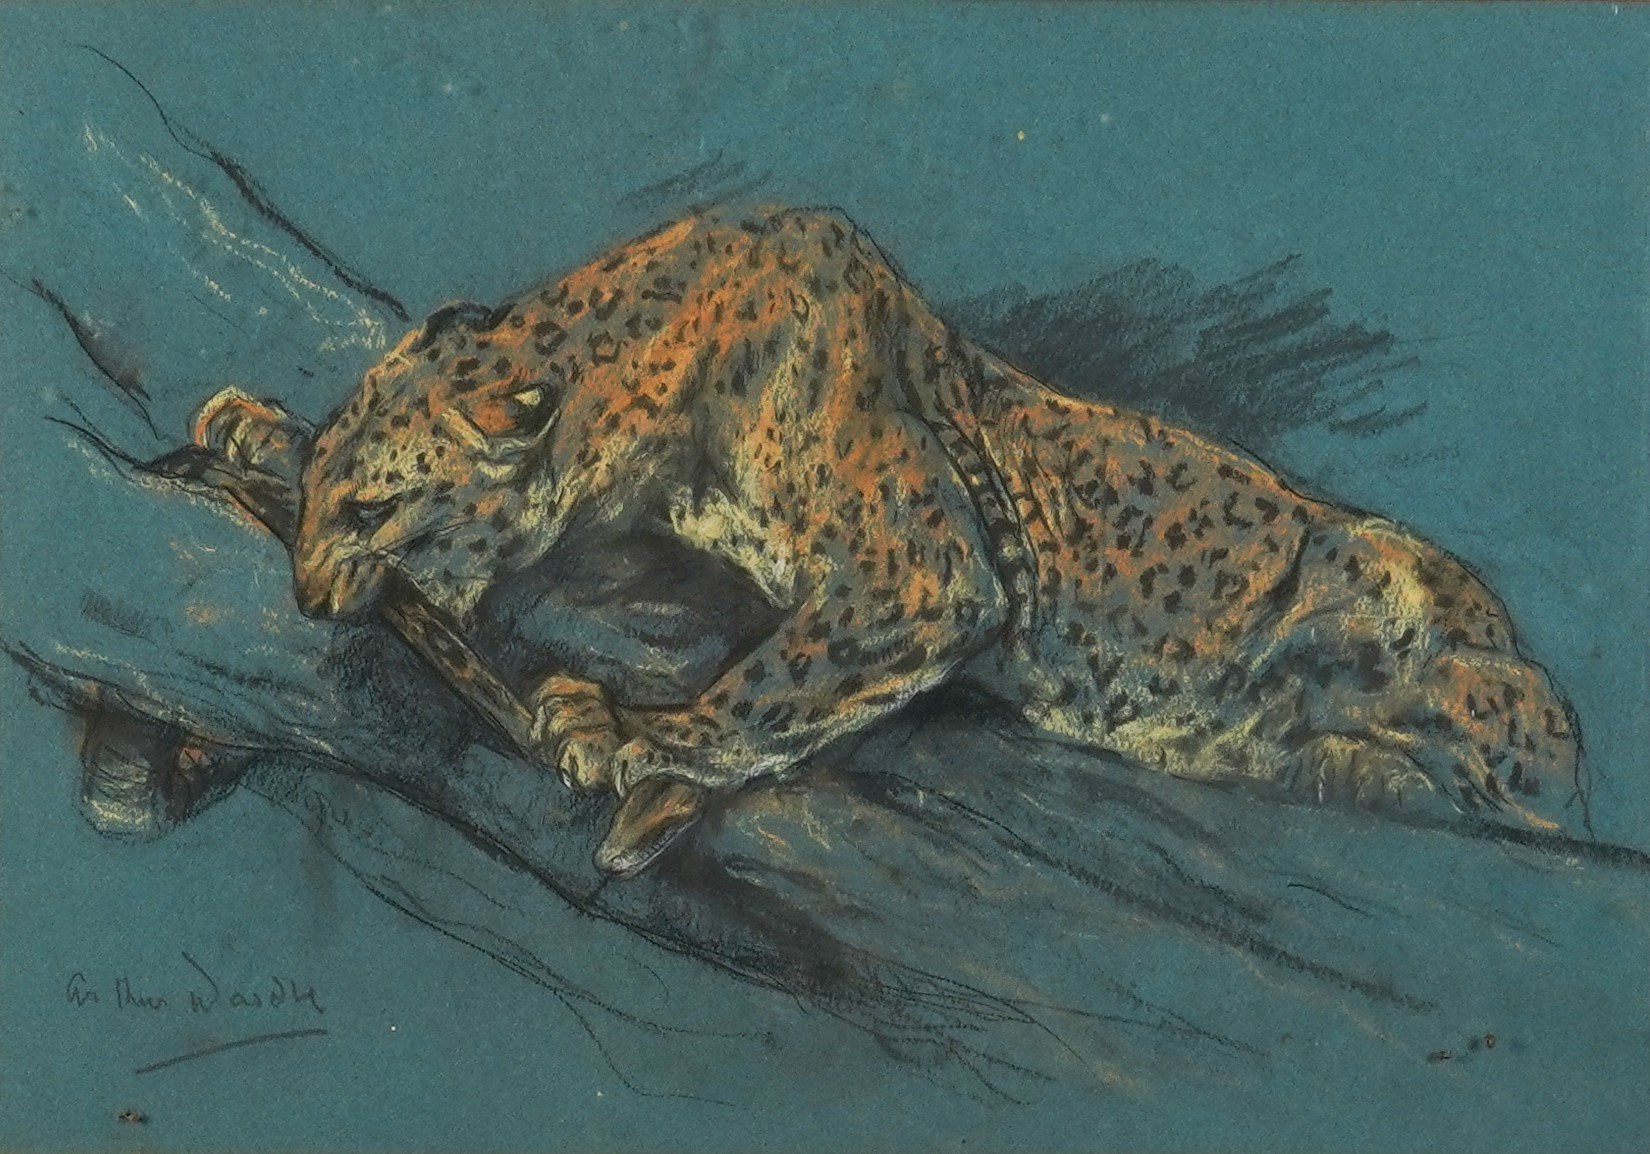 Leopard killing a python signed 'Arthur Wardle' (lower left) pastel on paper 25.5 x 36.5cm £500-800